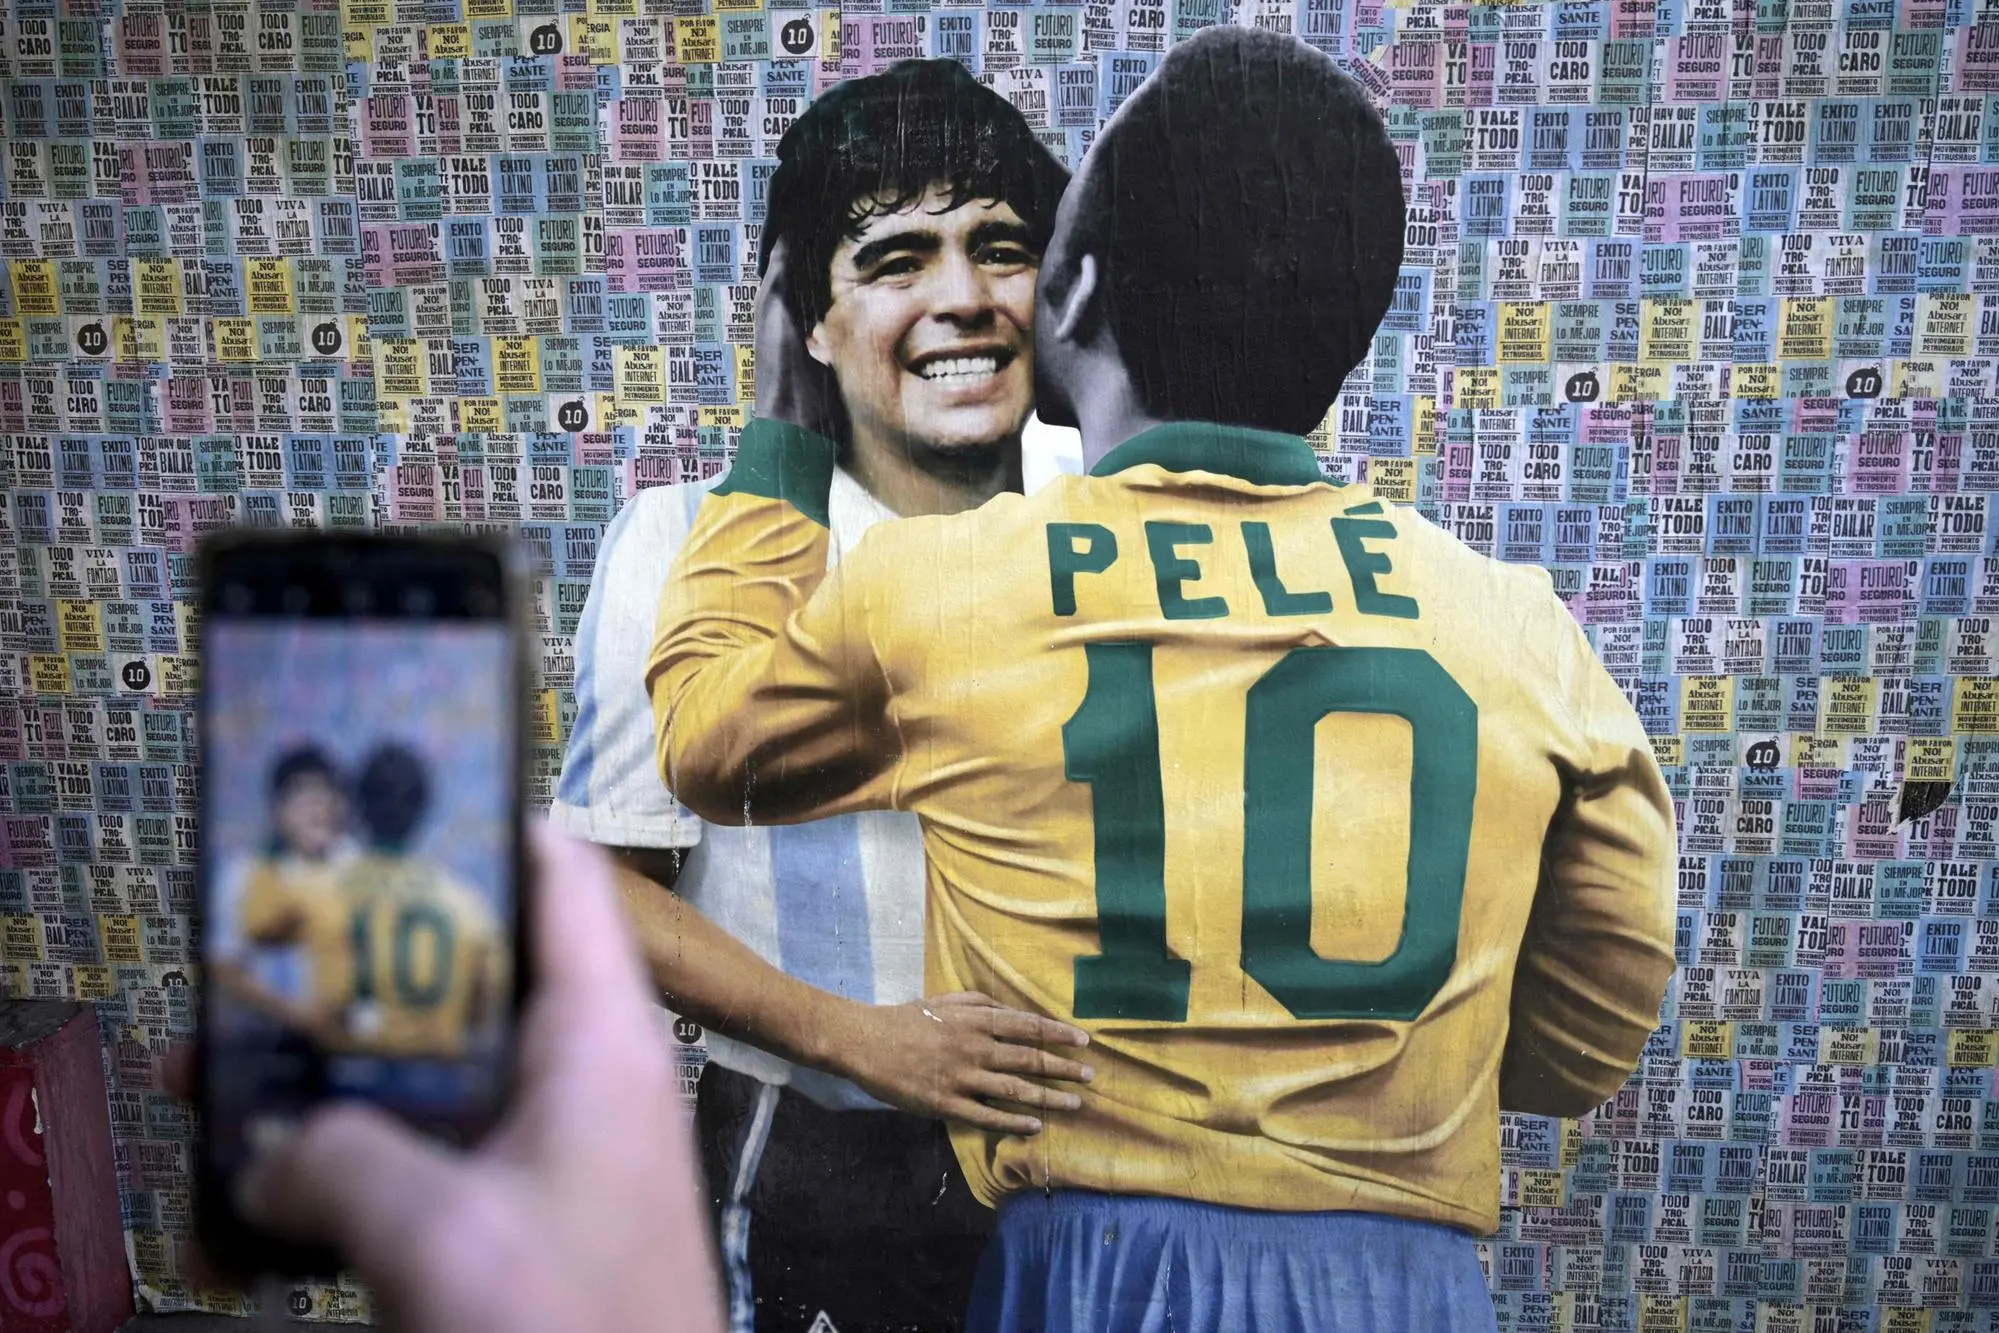 A mural of Pele and Maradona